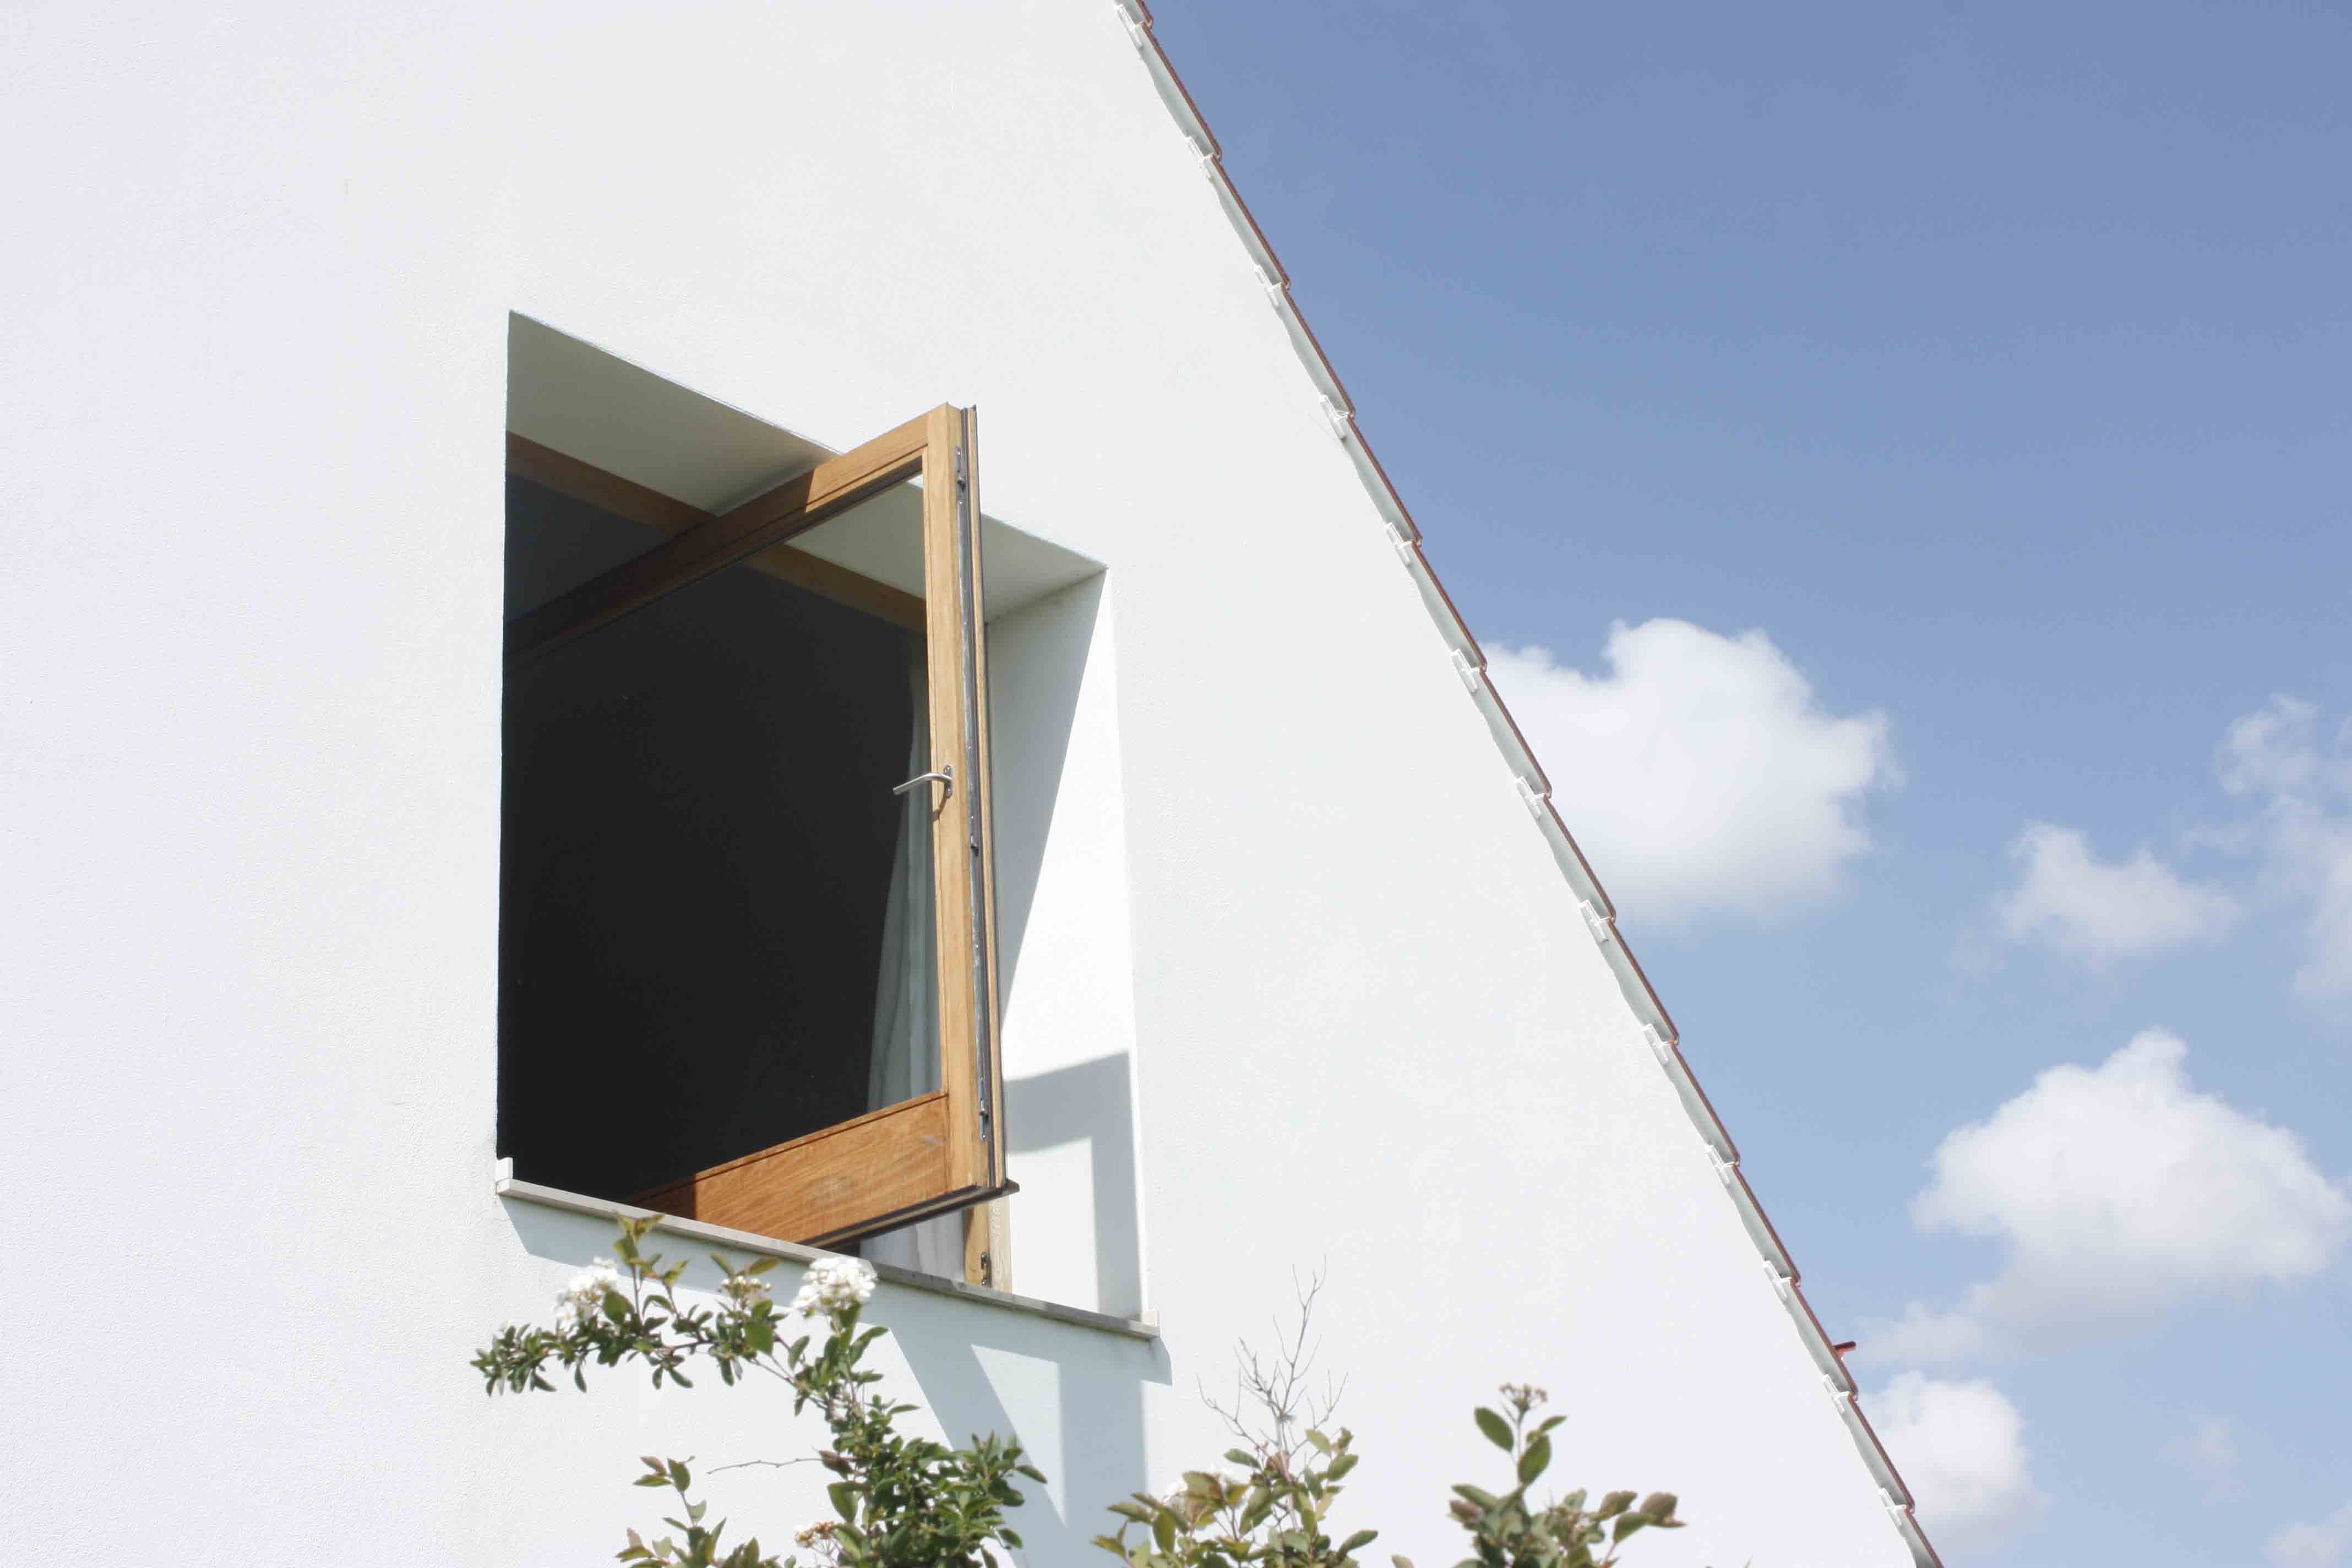 Pivoting window by Mathias Stelmach